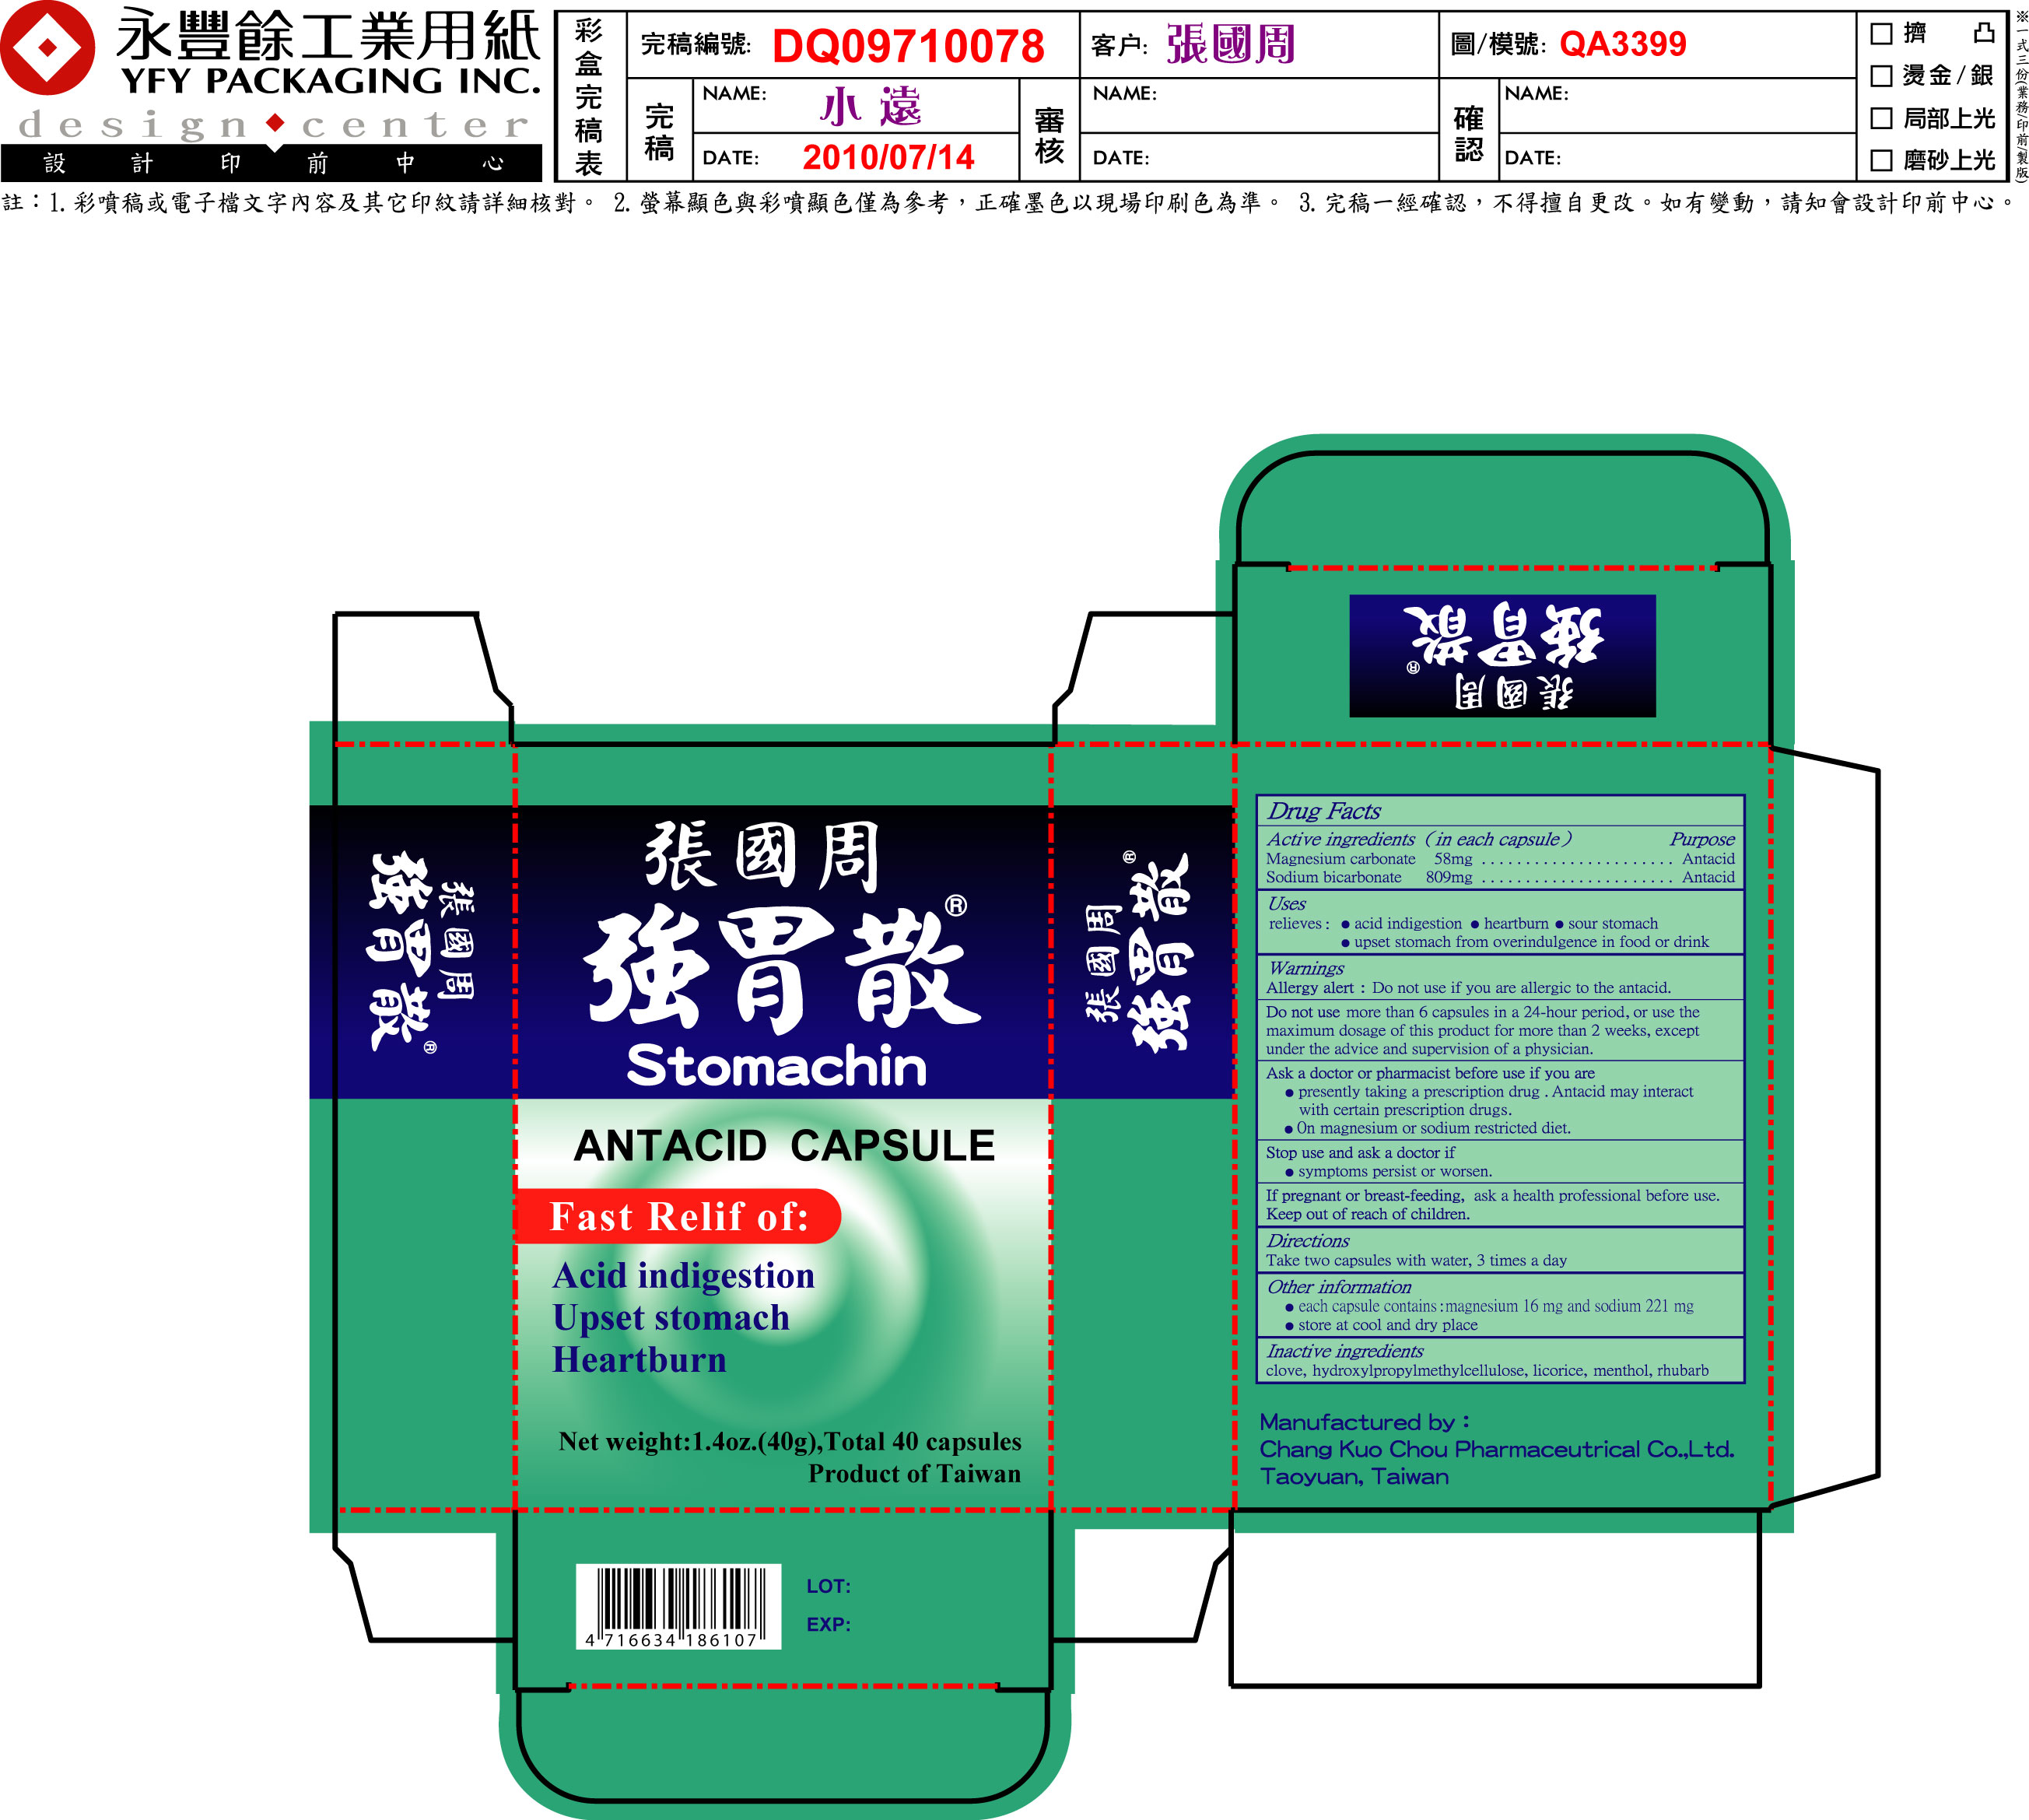 Image of carton label